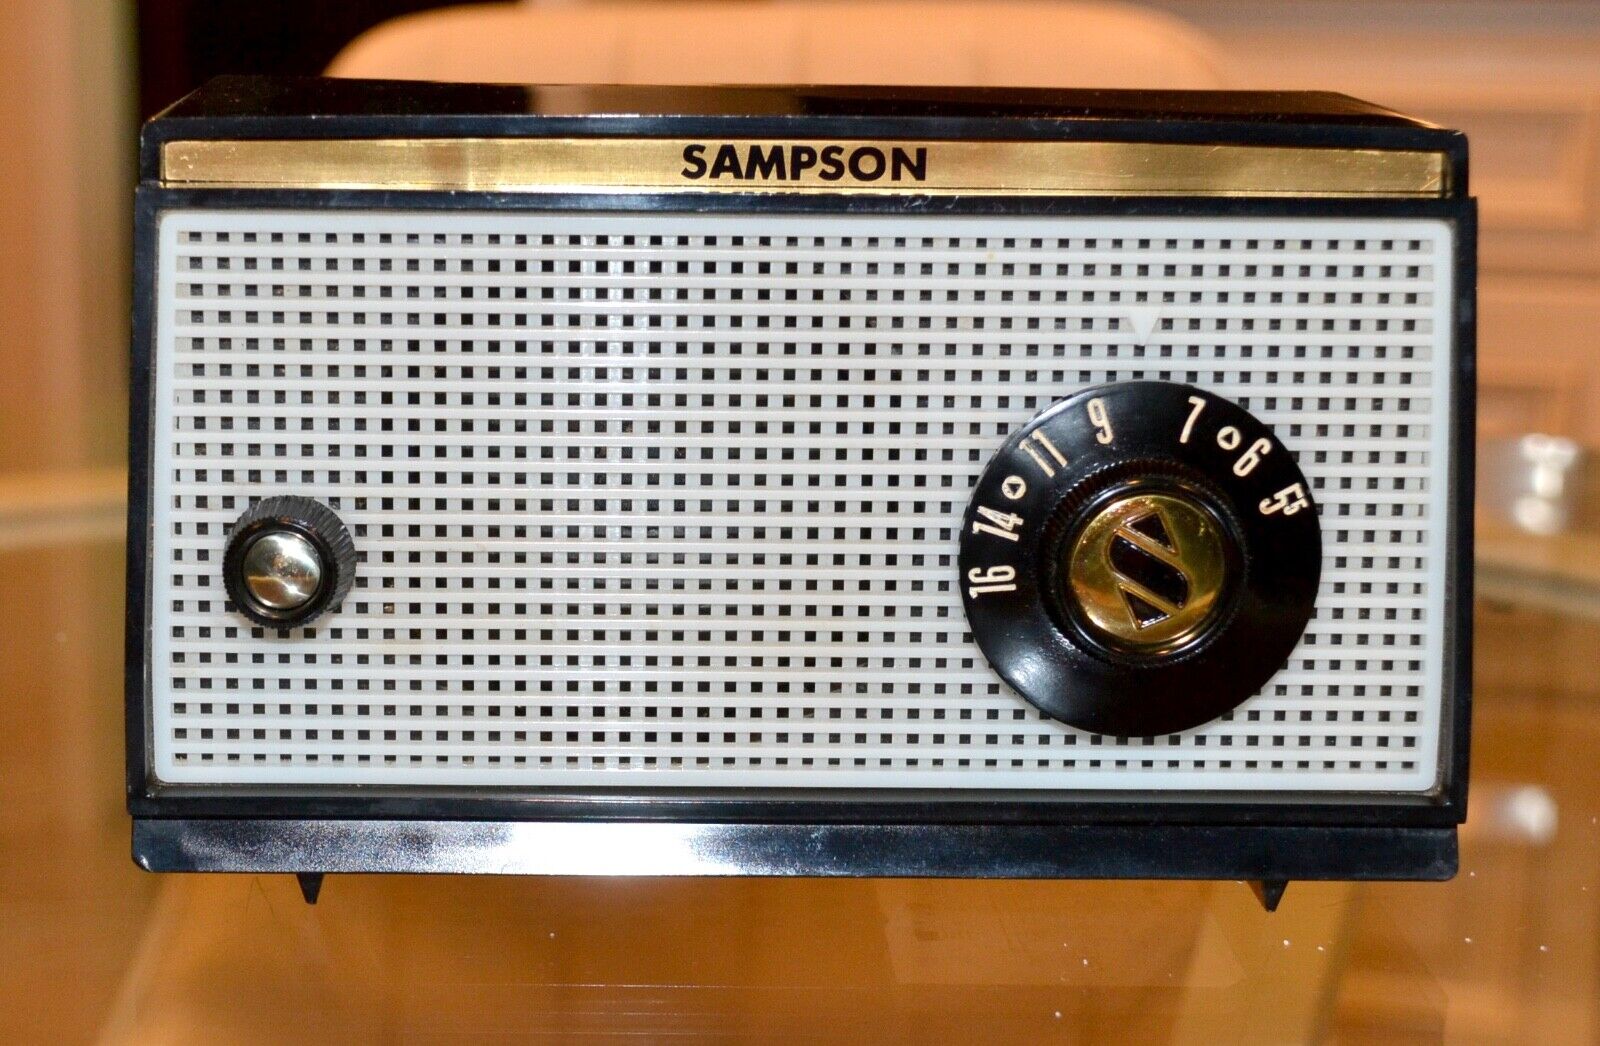 VINTAGE - Sampson Model ST-61 Tabletop Tube Radio - Partially Restored - Works